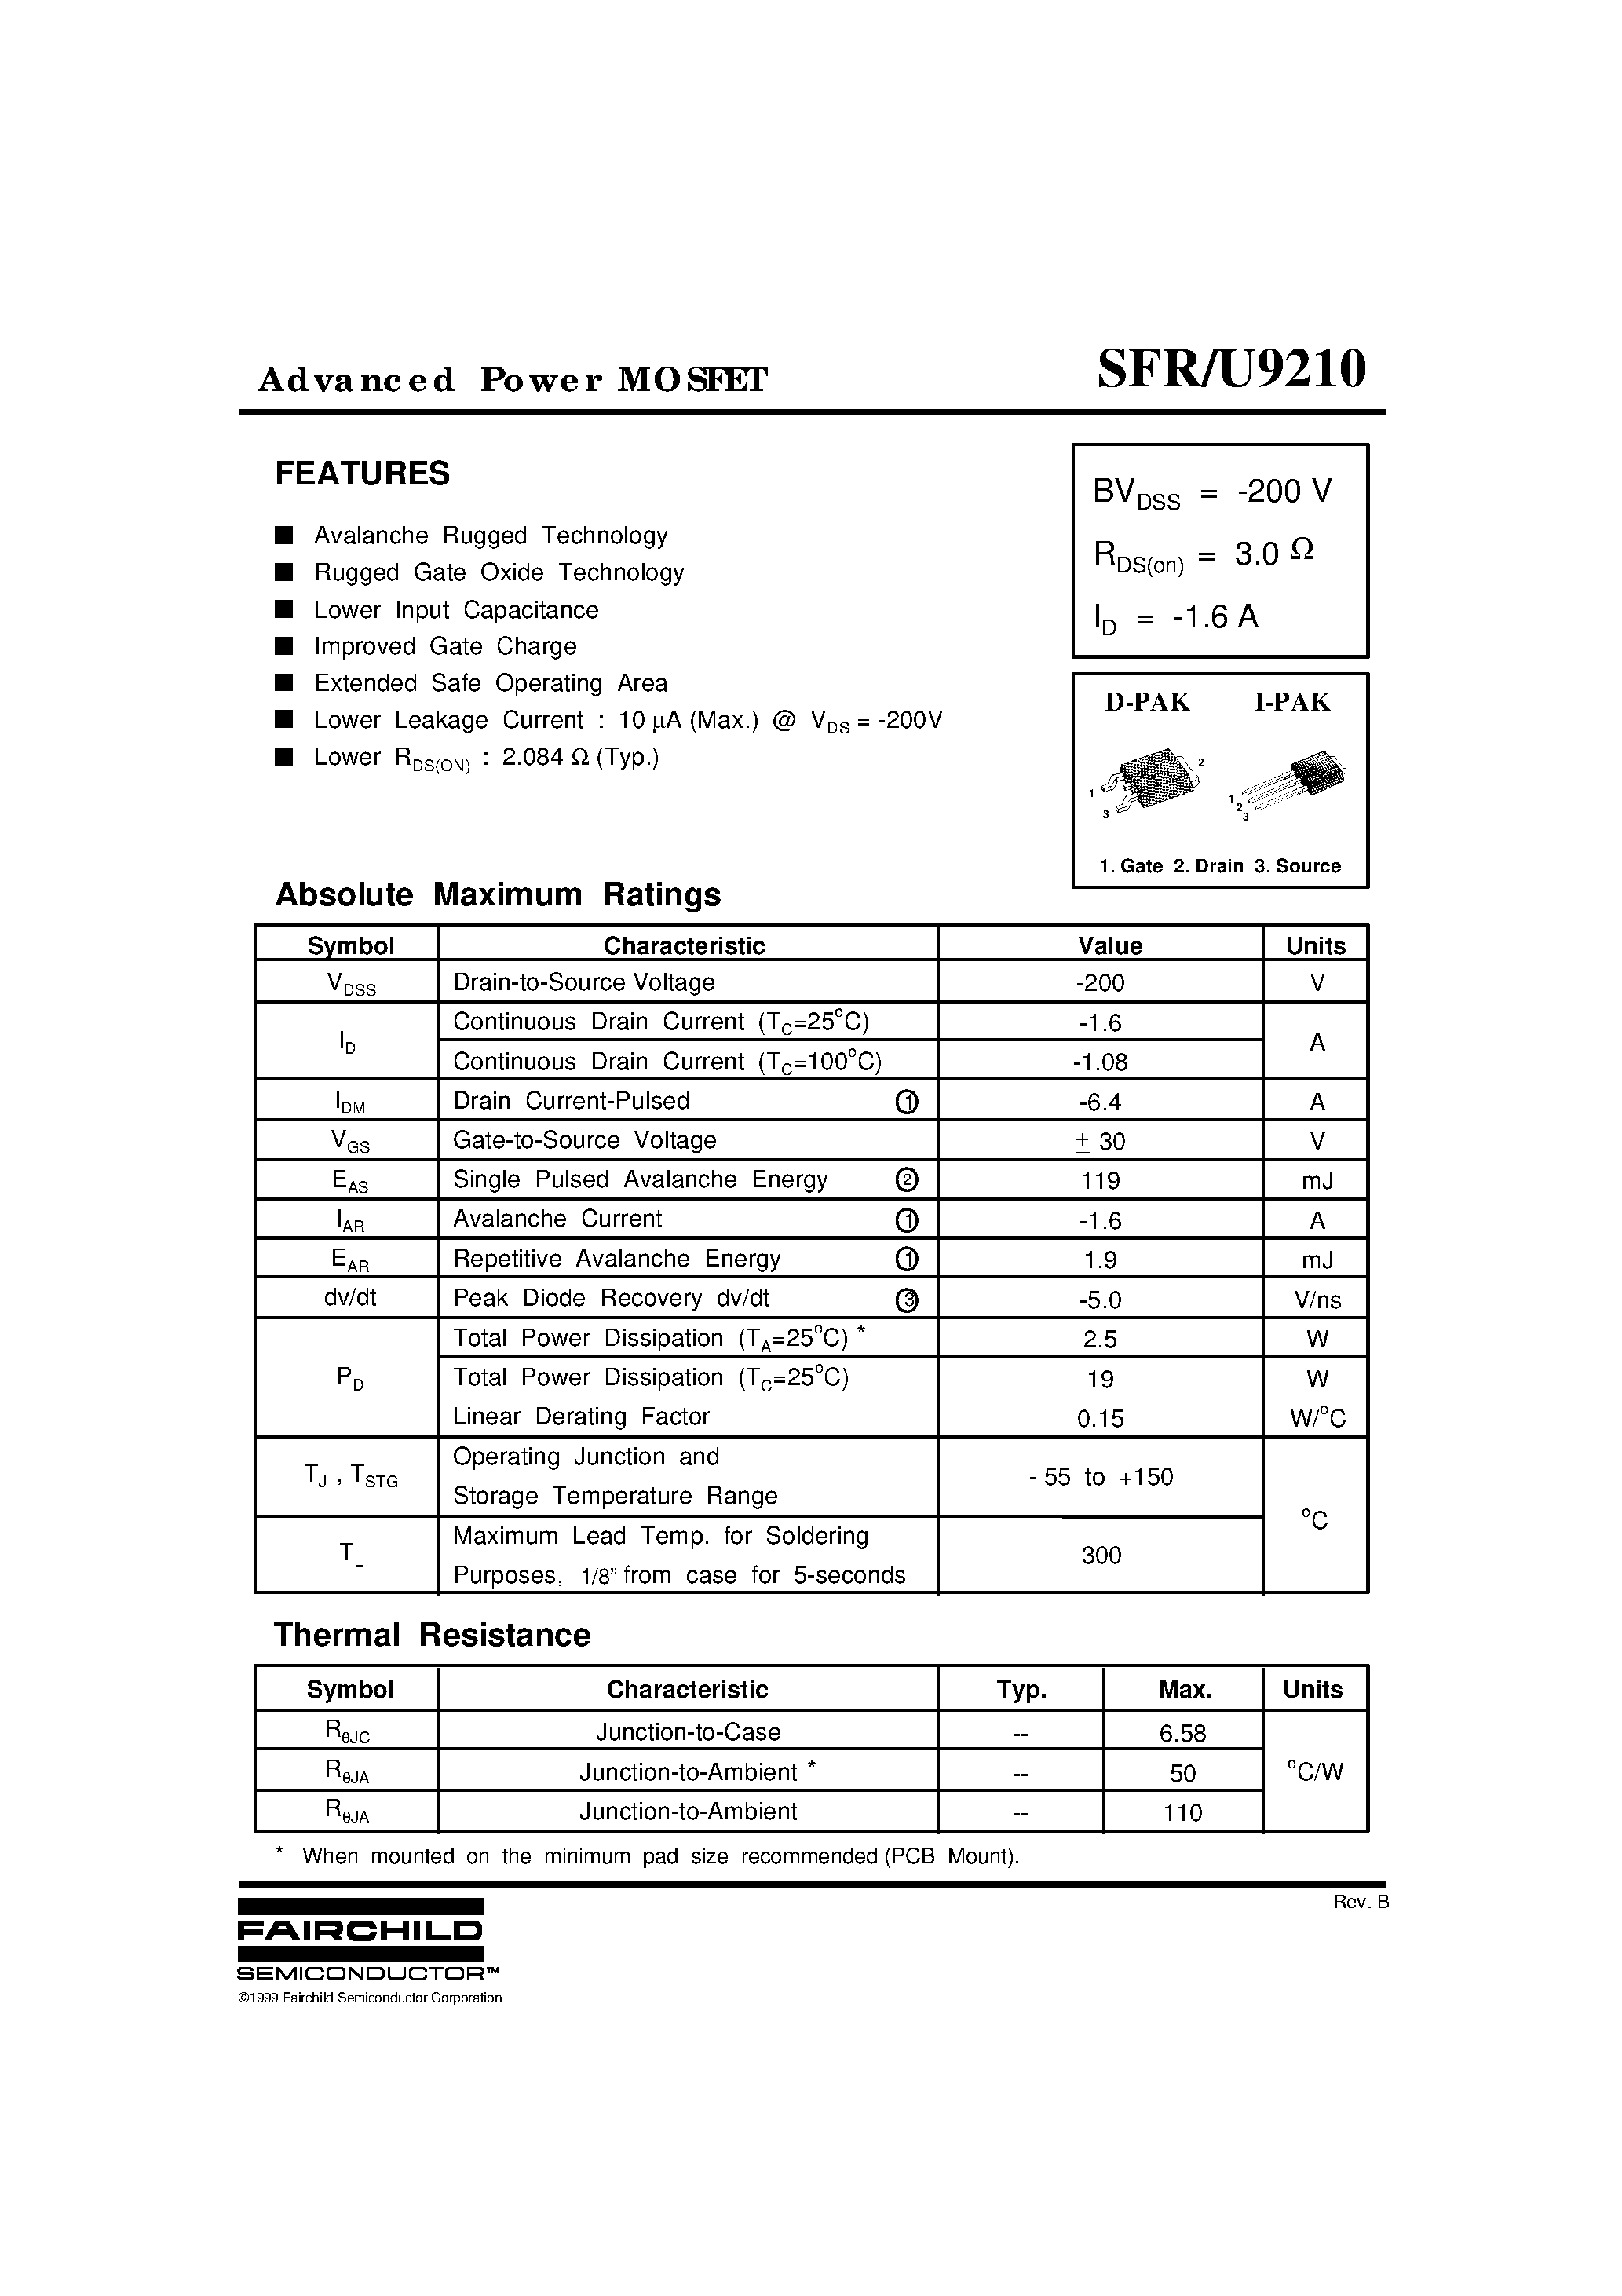 Datasheet SFRU9210 - Advanced Power MOSFET page 1